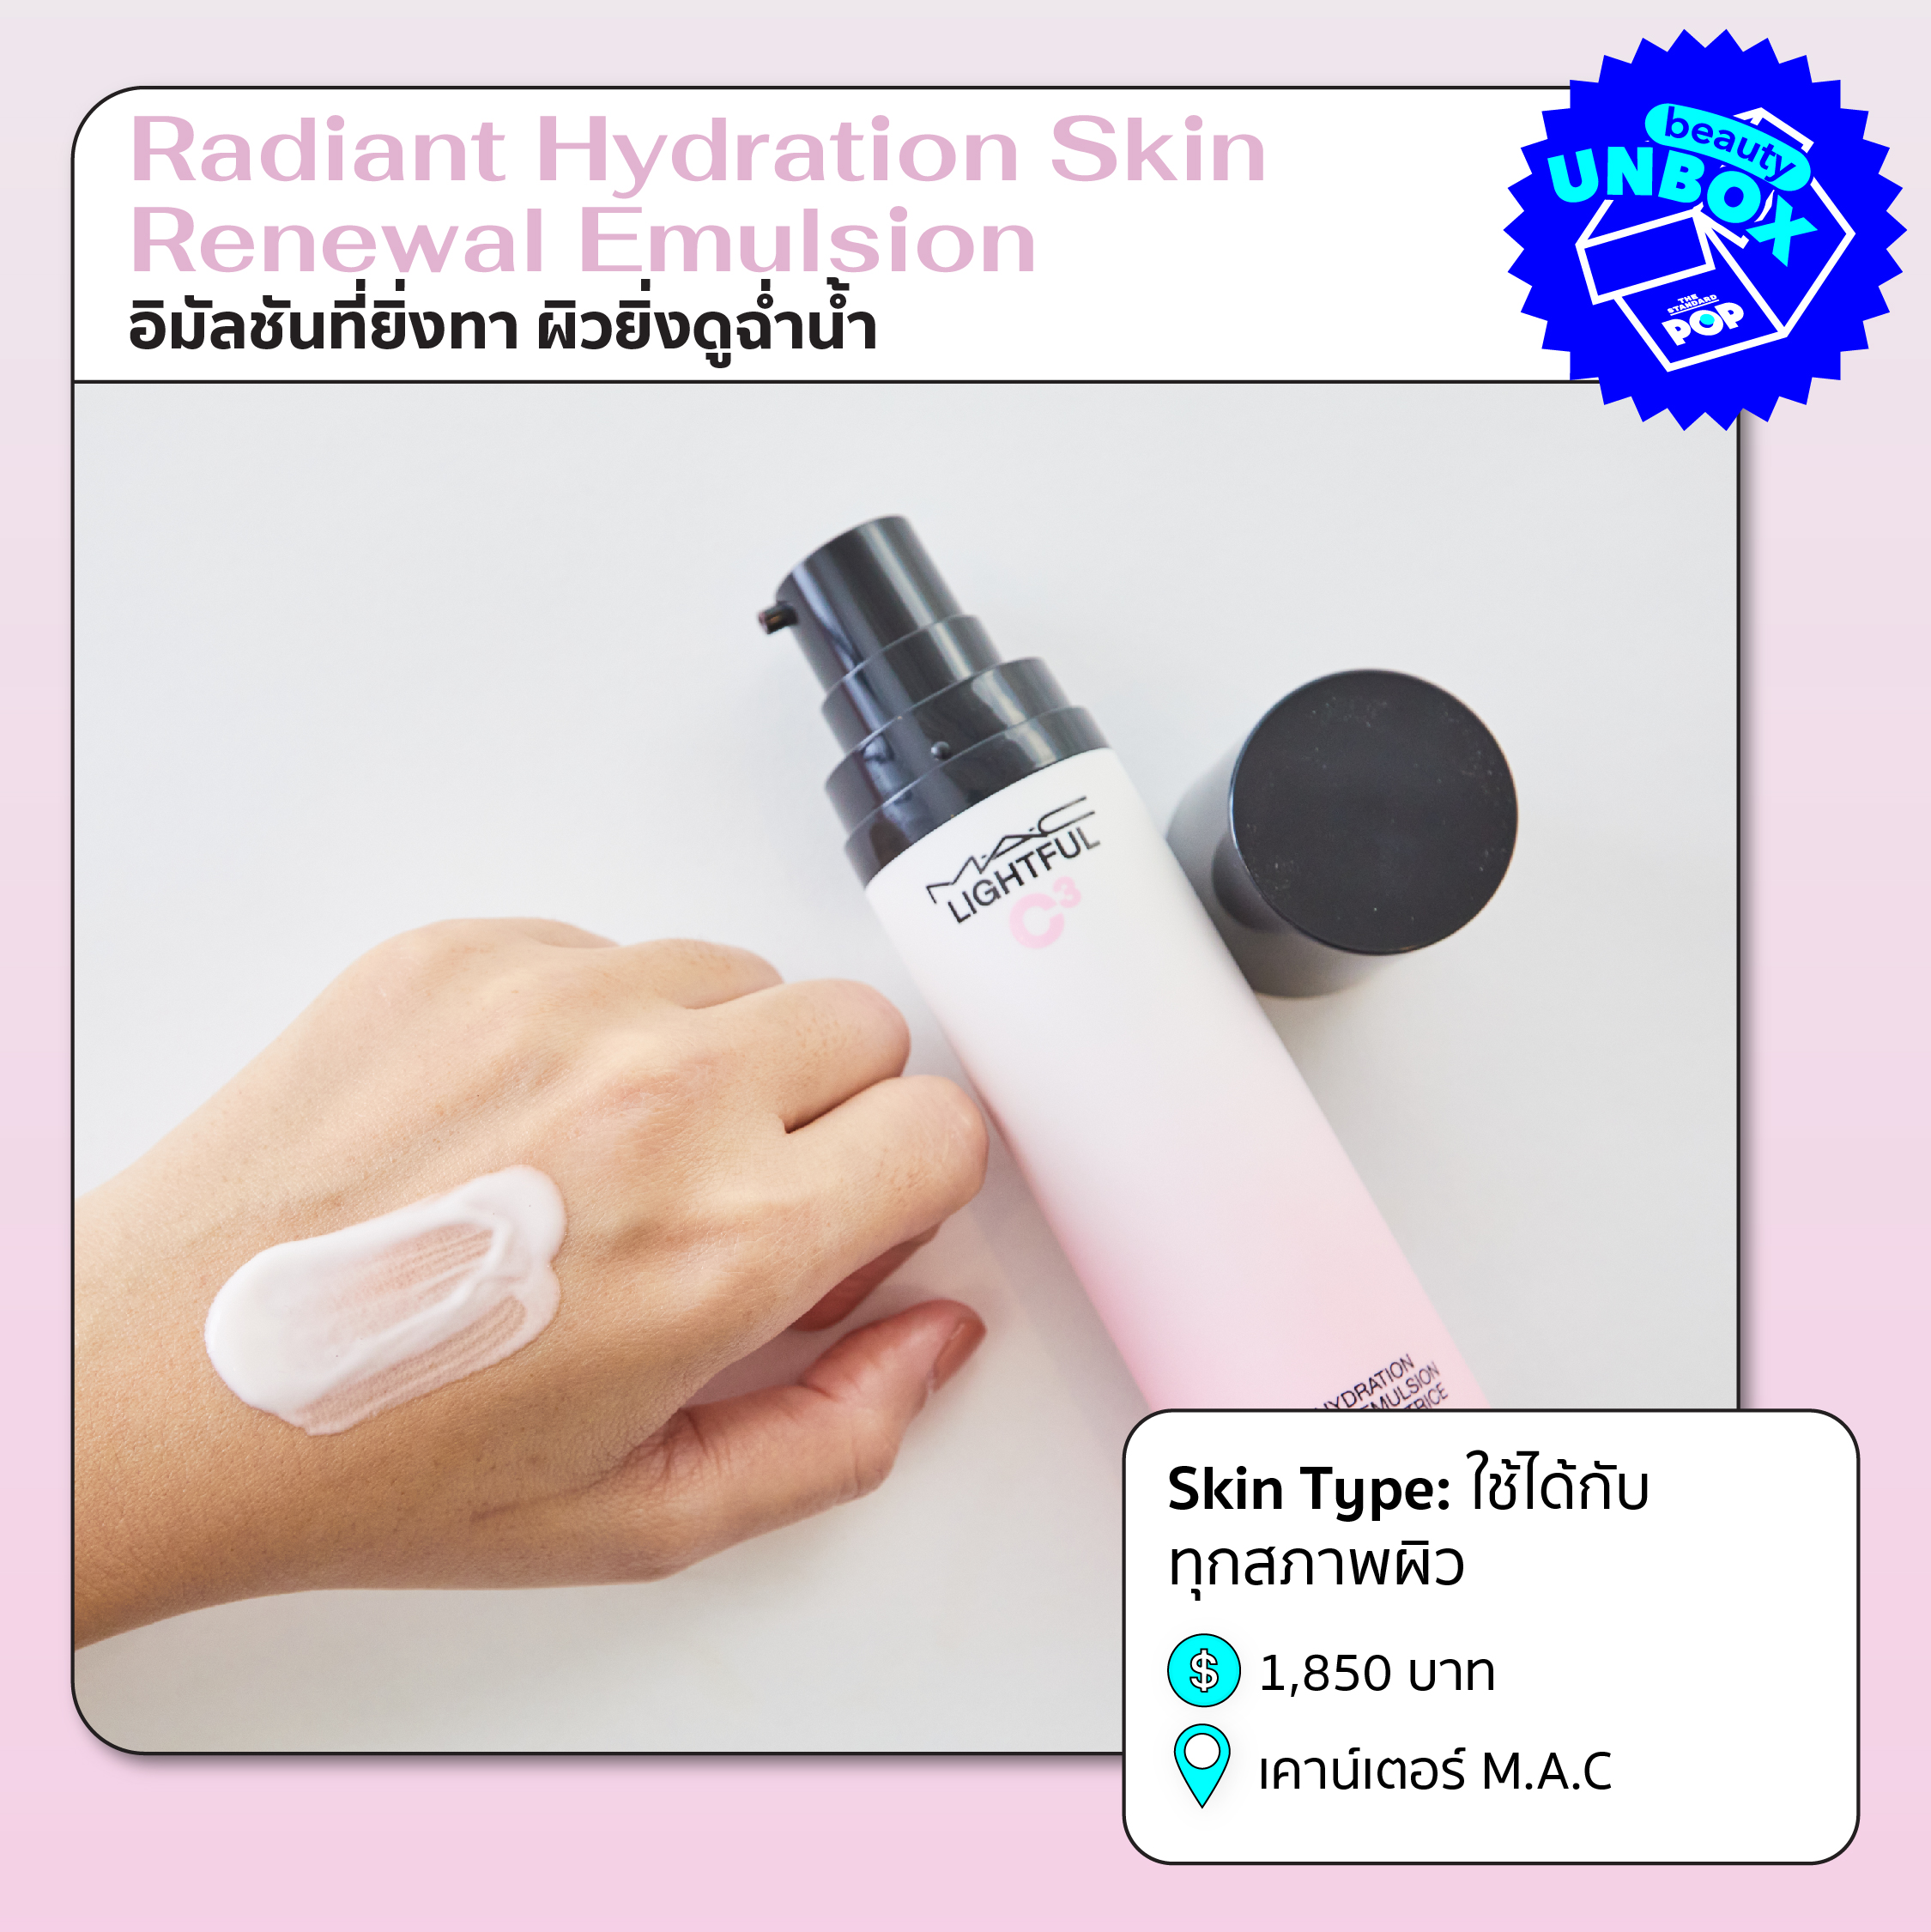 Radiant Hydration Skin Renewal Emulsion